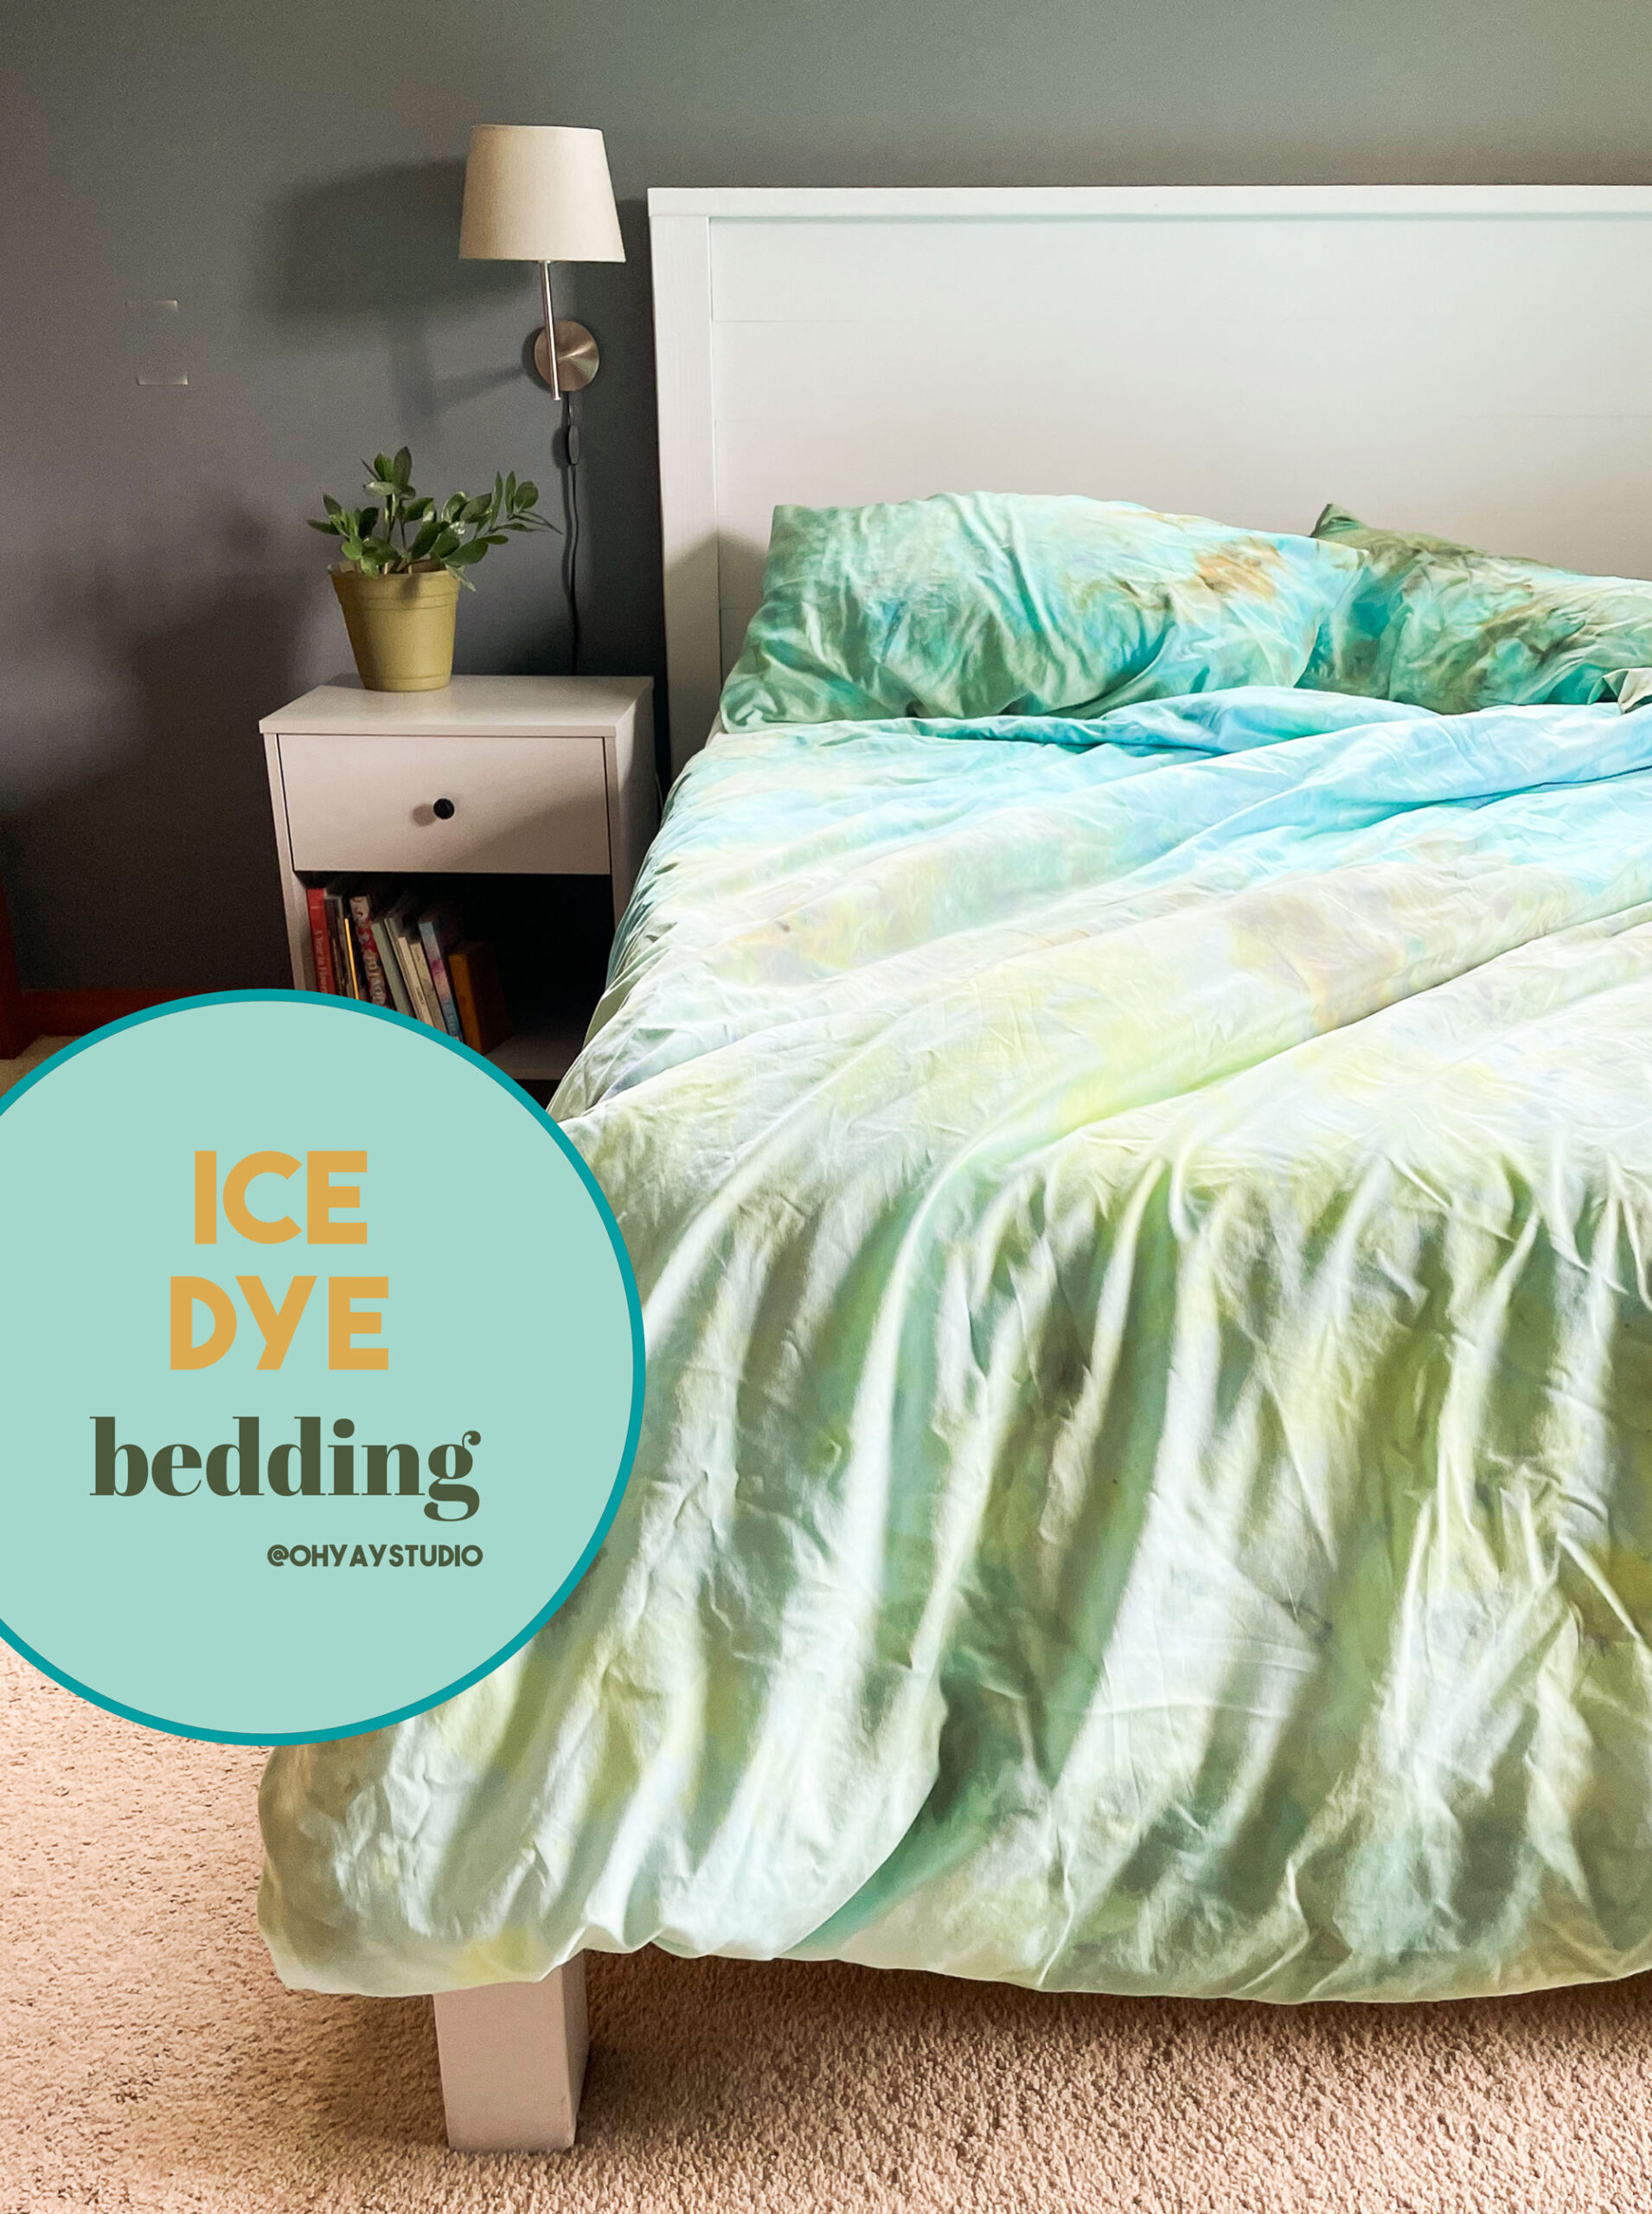 ice dye bedding, tie dye bedding, how to ice dye, ice dye DIY, how to ice dye Tulip, How to use Tulip dye, How to tie dye big items, oh yay studio tie dye 